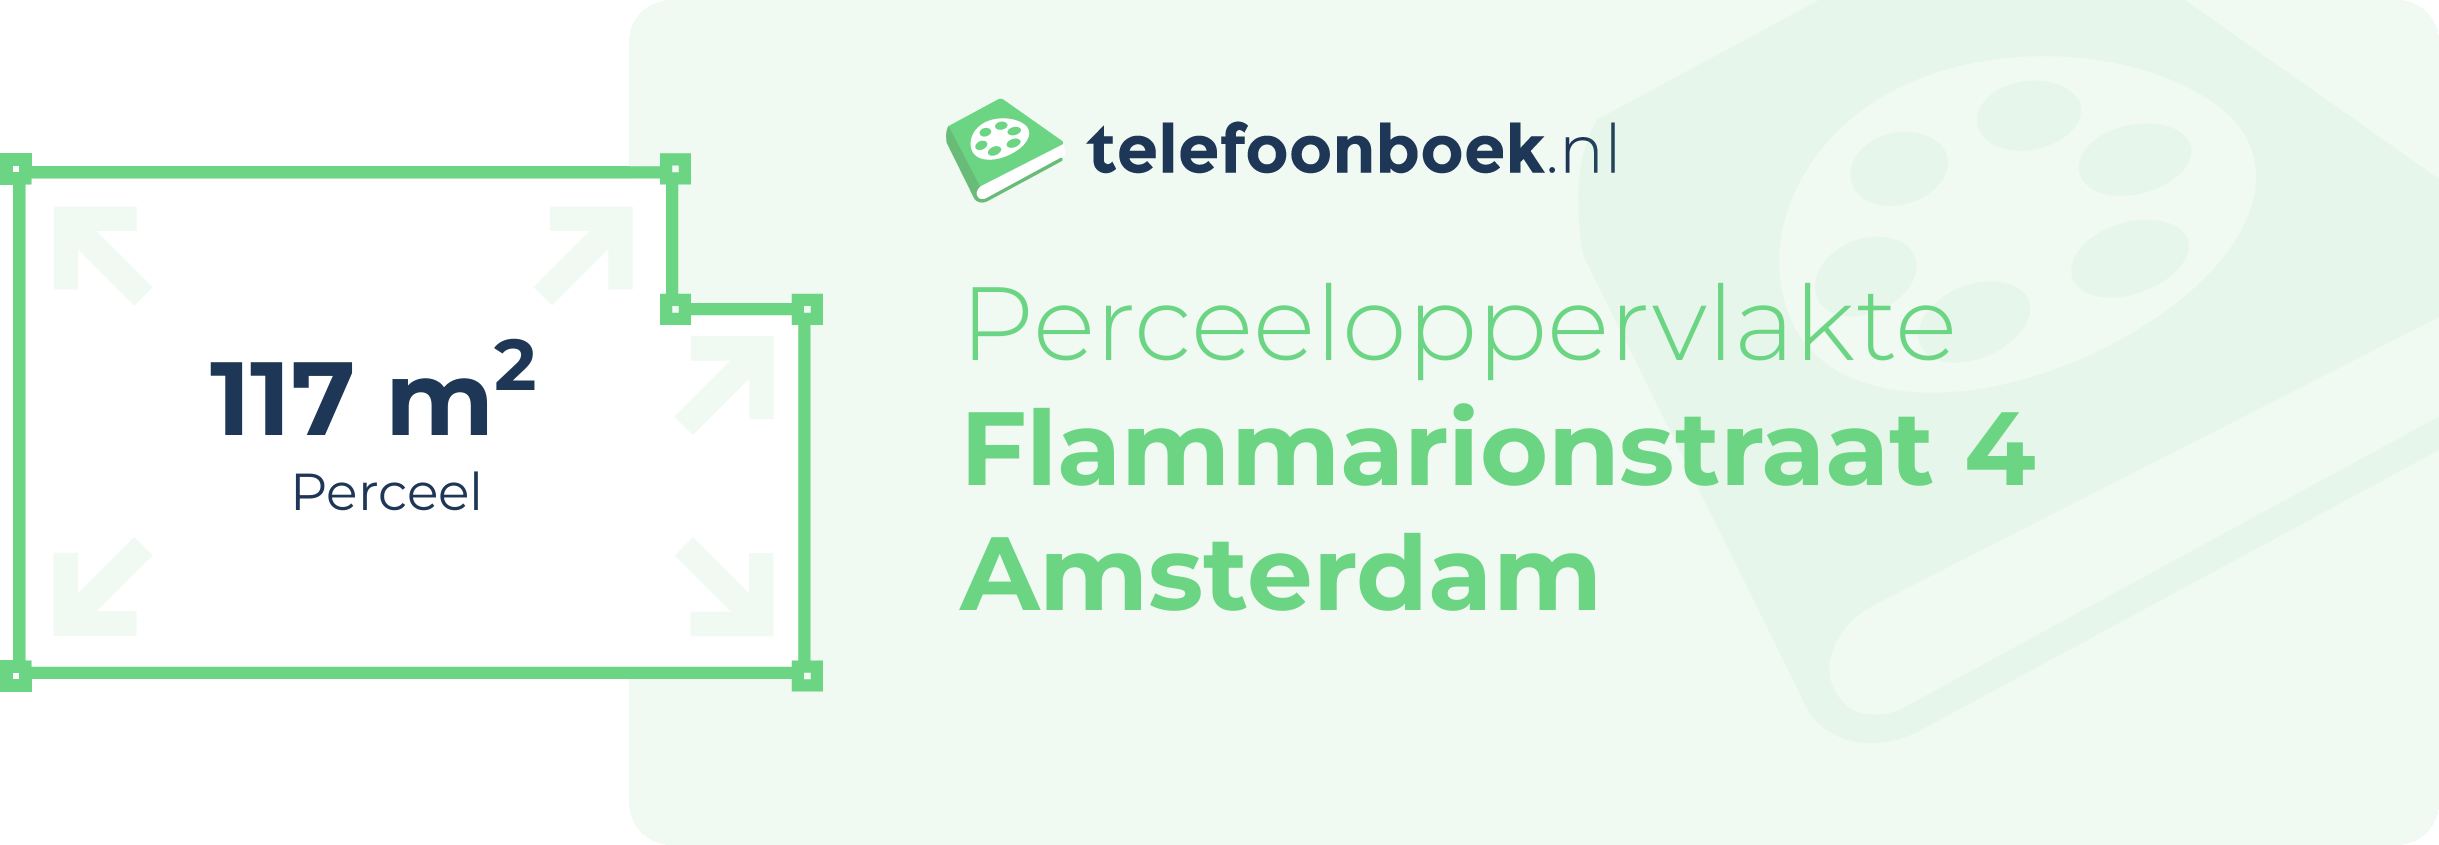 Perceeloppervlakte Flammarionstraat 4 Amsterdam